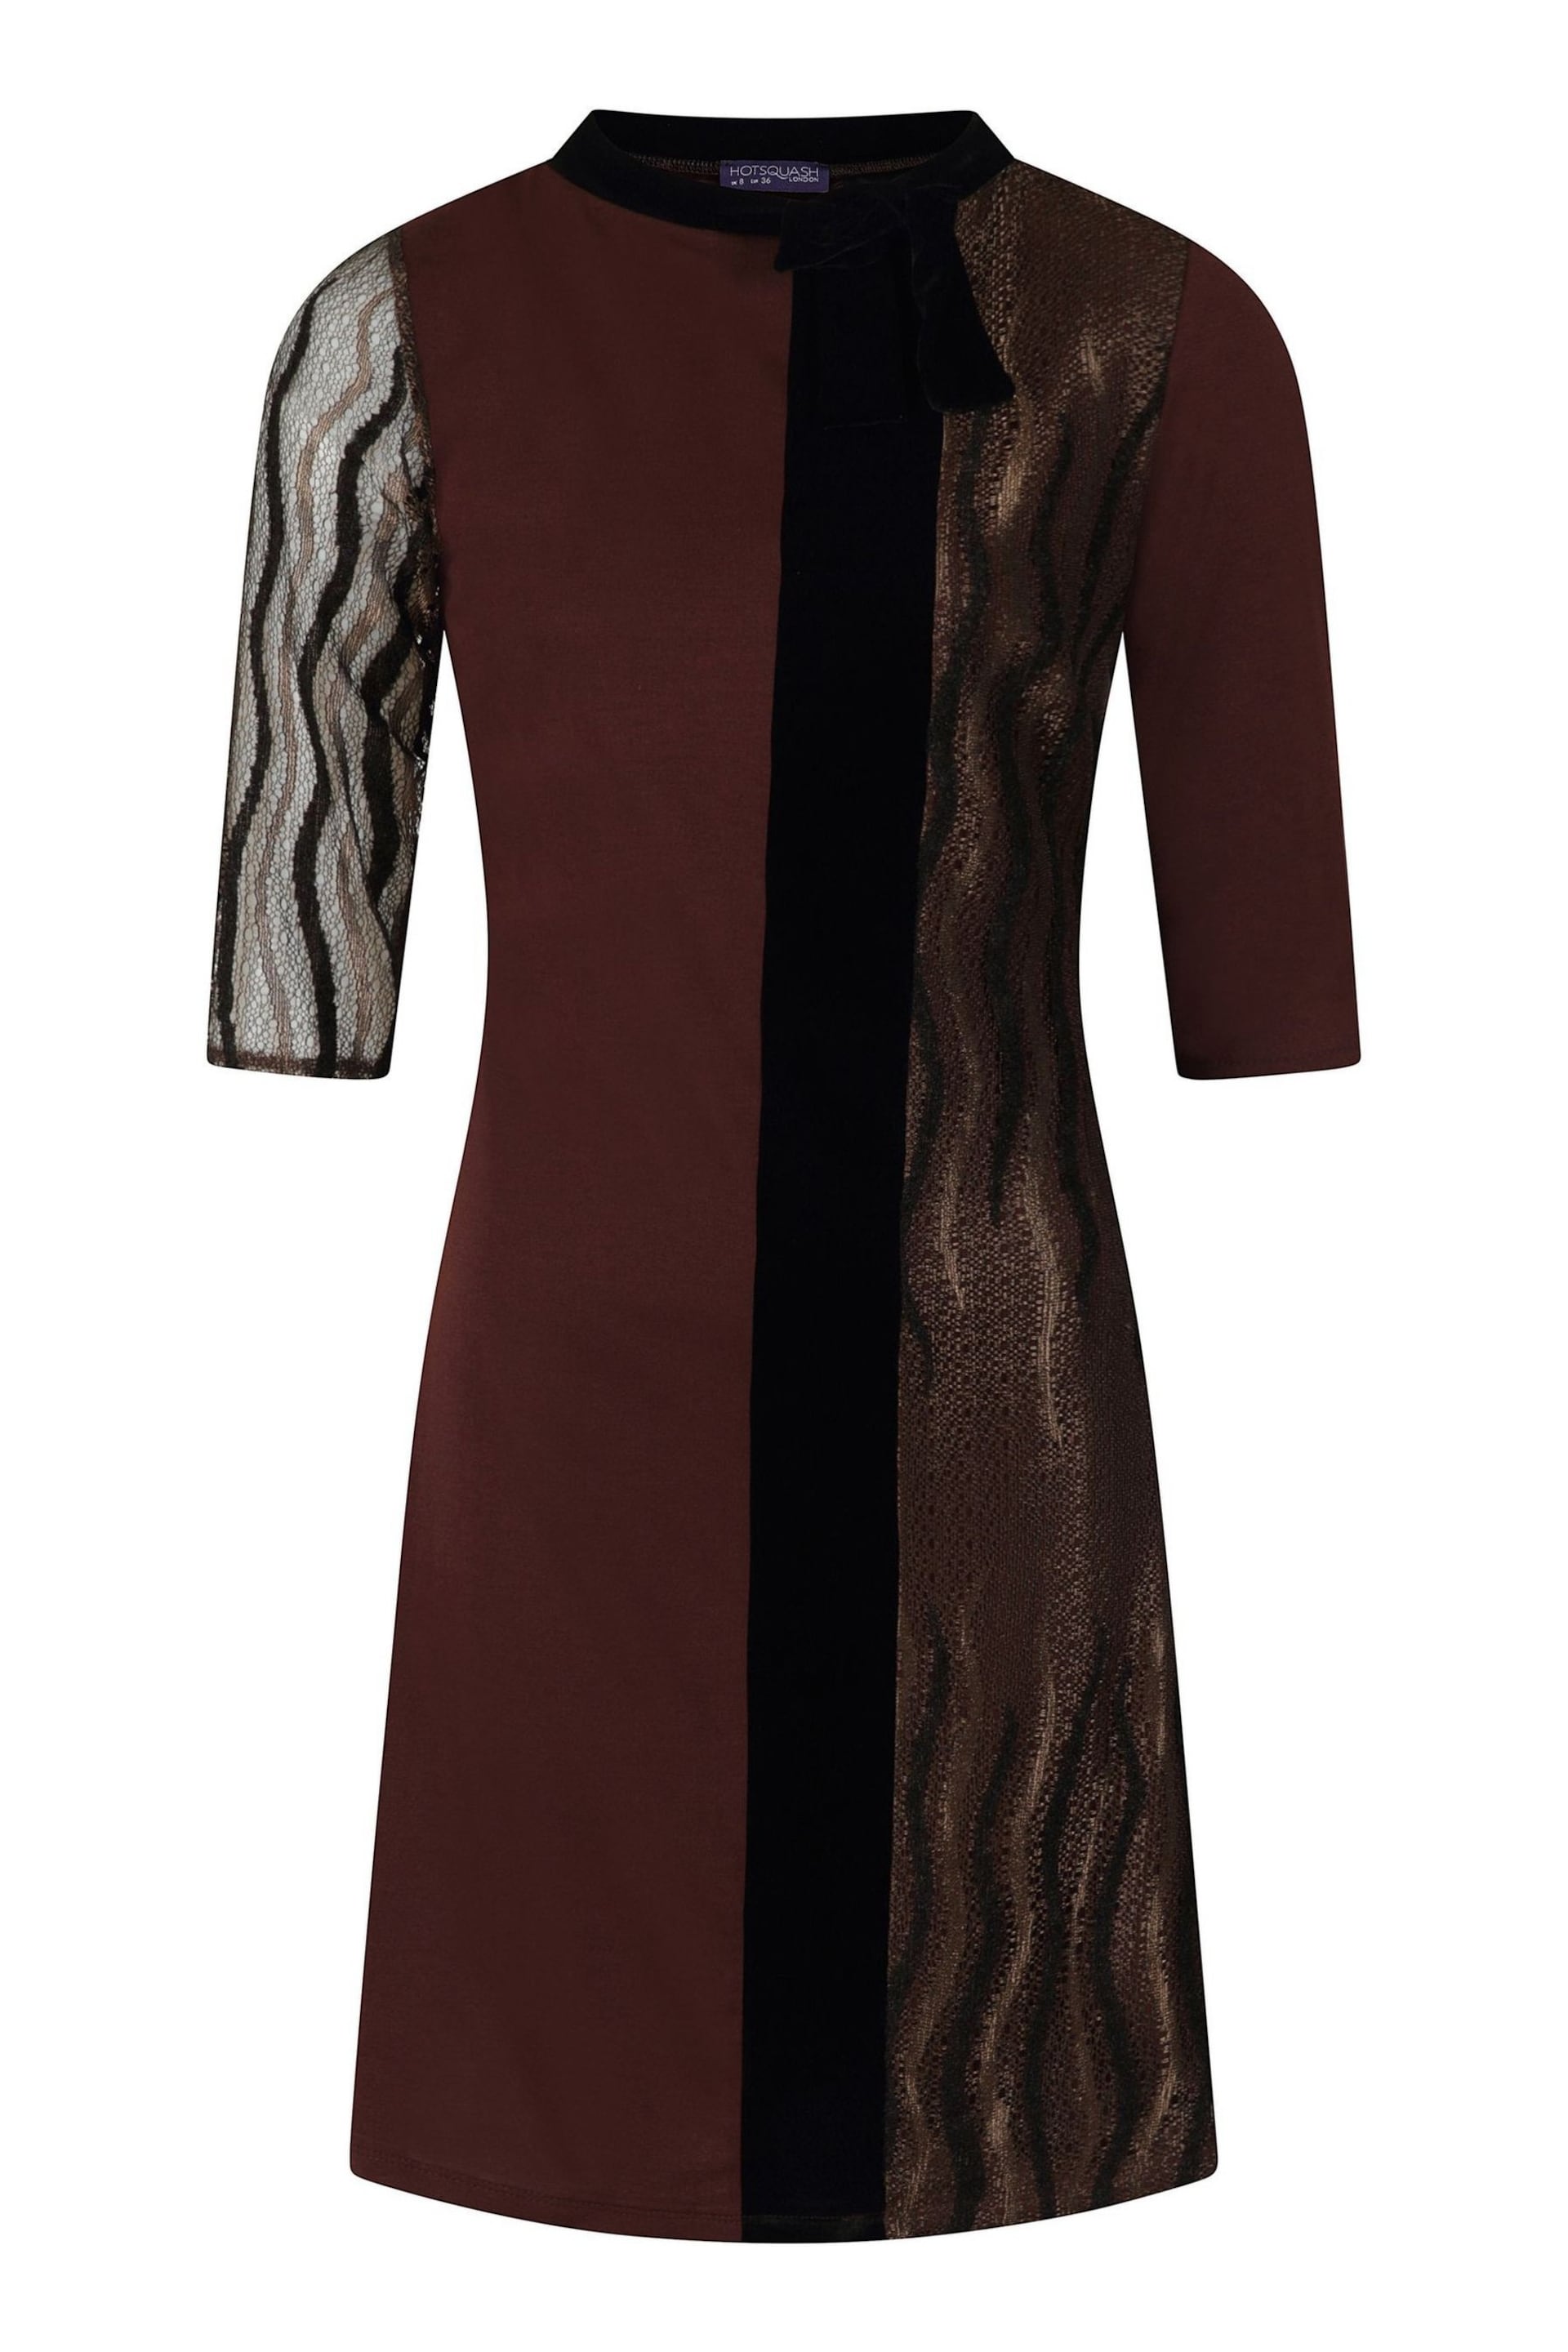 HotSquash Brown Princess Seam Dress With Velvet - Image 4 of 5